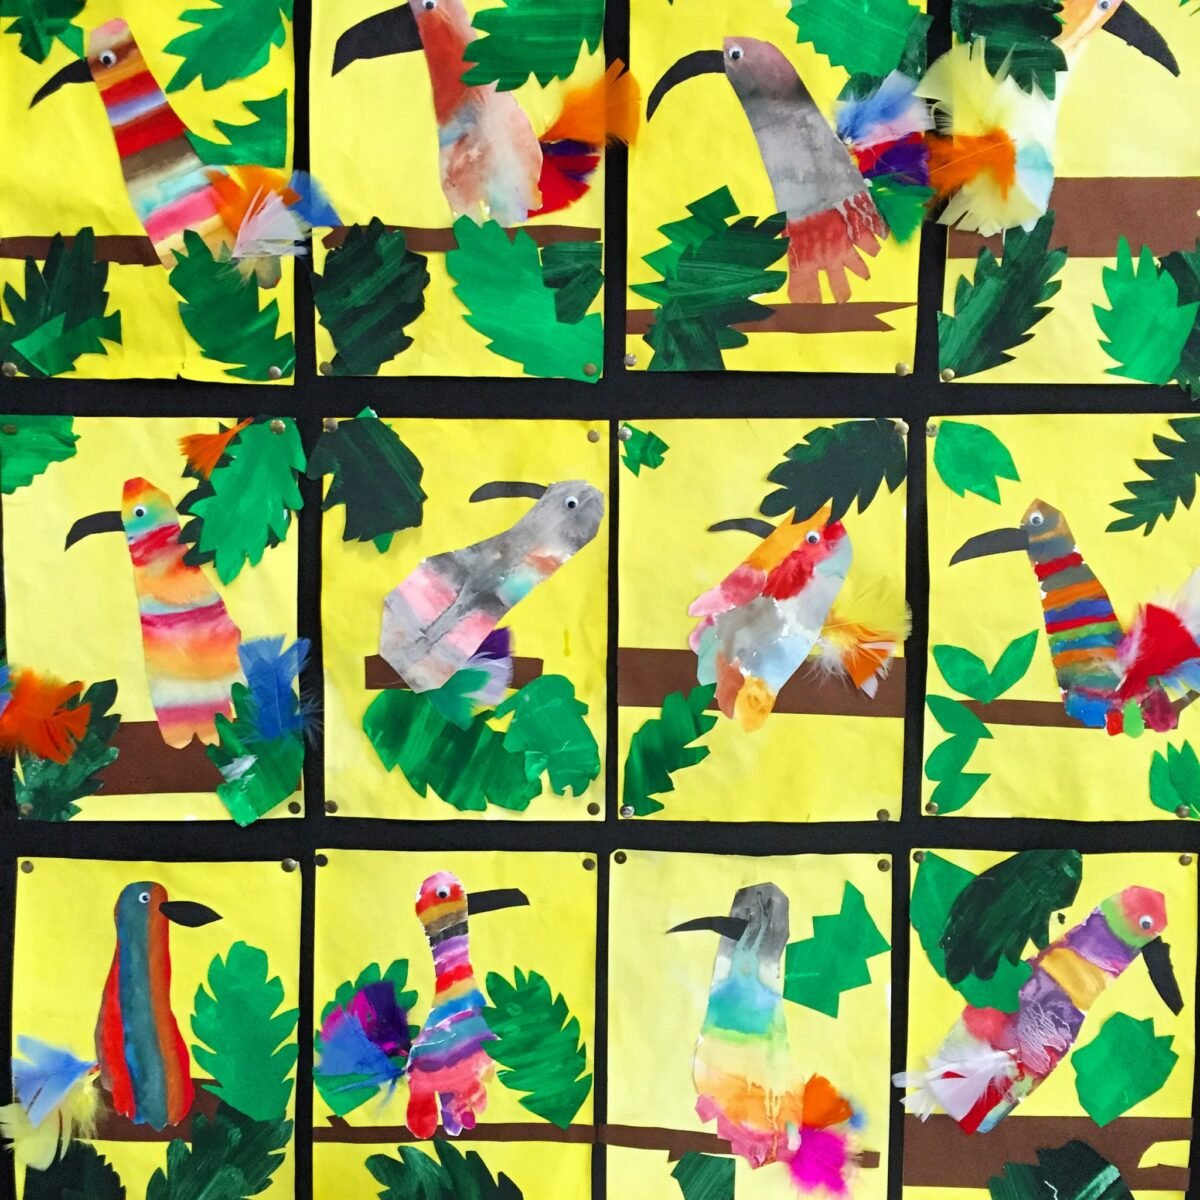 rainforest art project for kids